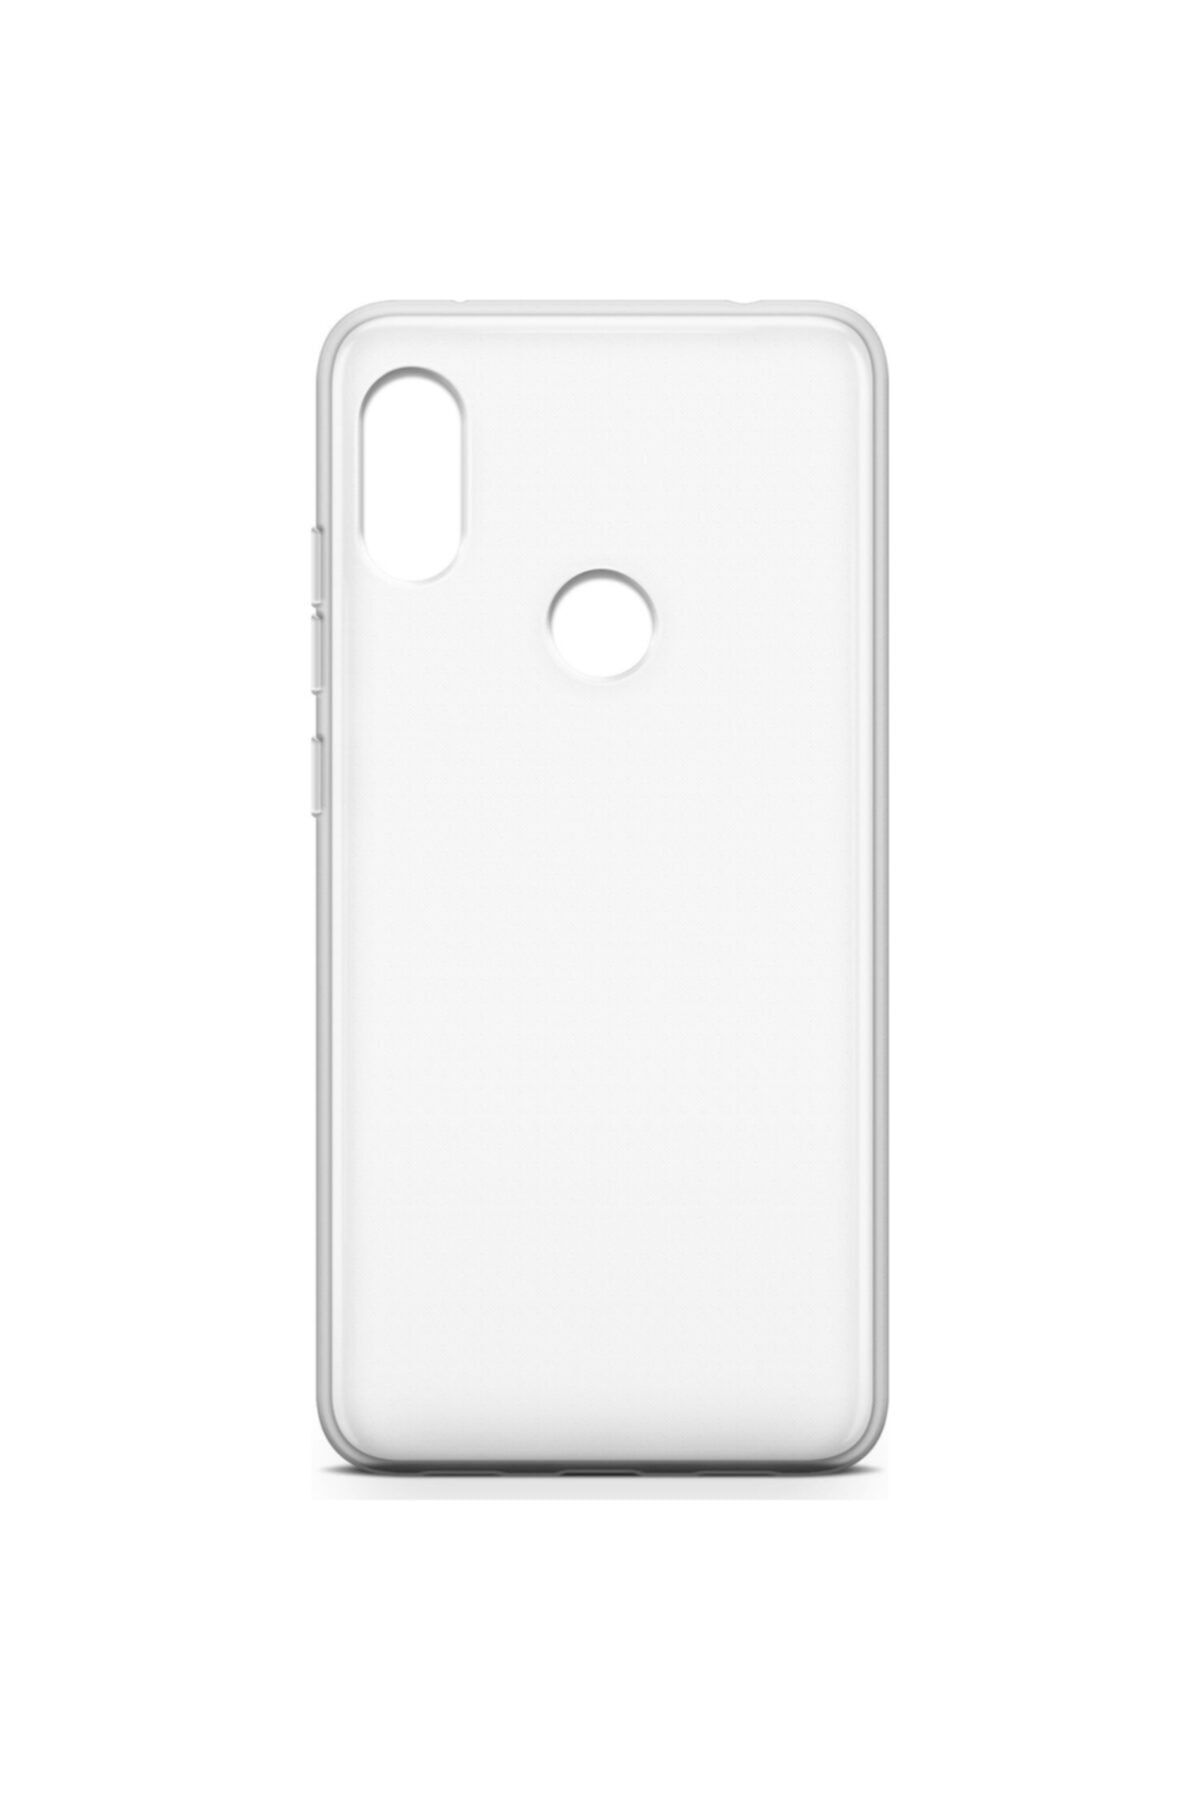 Fibaks Xiaomi Redmi Note 6 Pro Kılıf A Şeffaf Lüx Süper Yumuşak 0.3mm Ince Slim Silikon